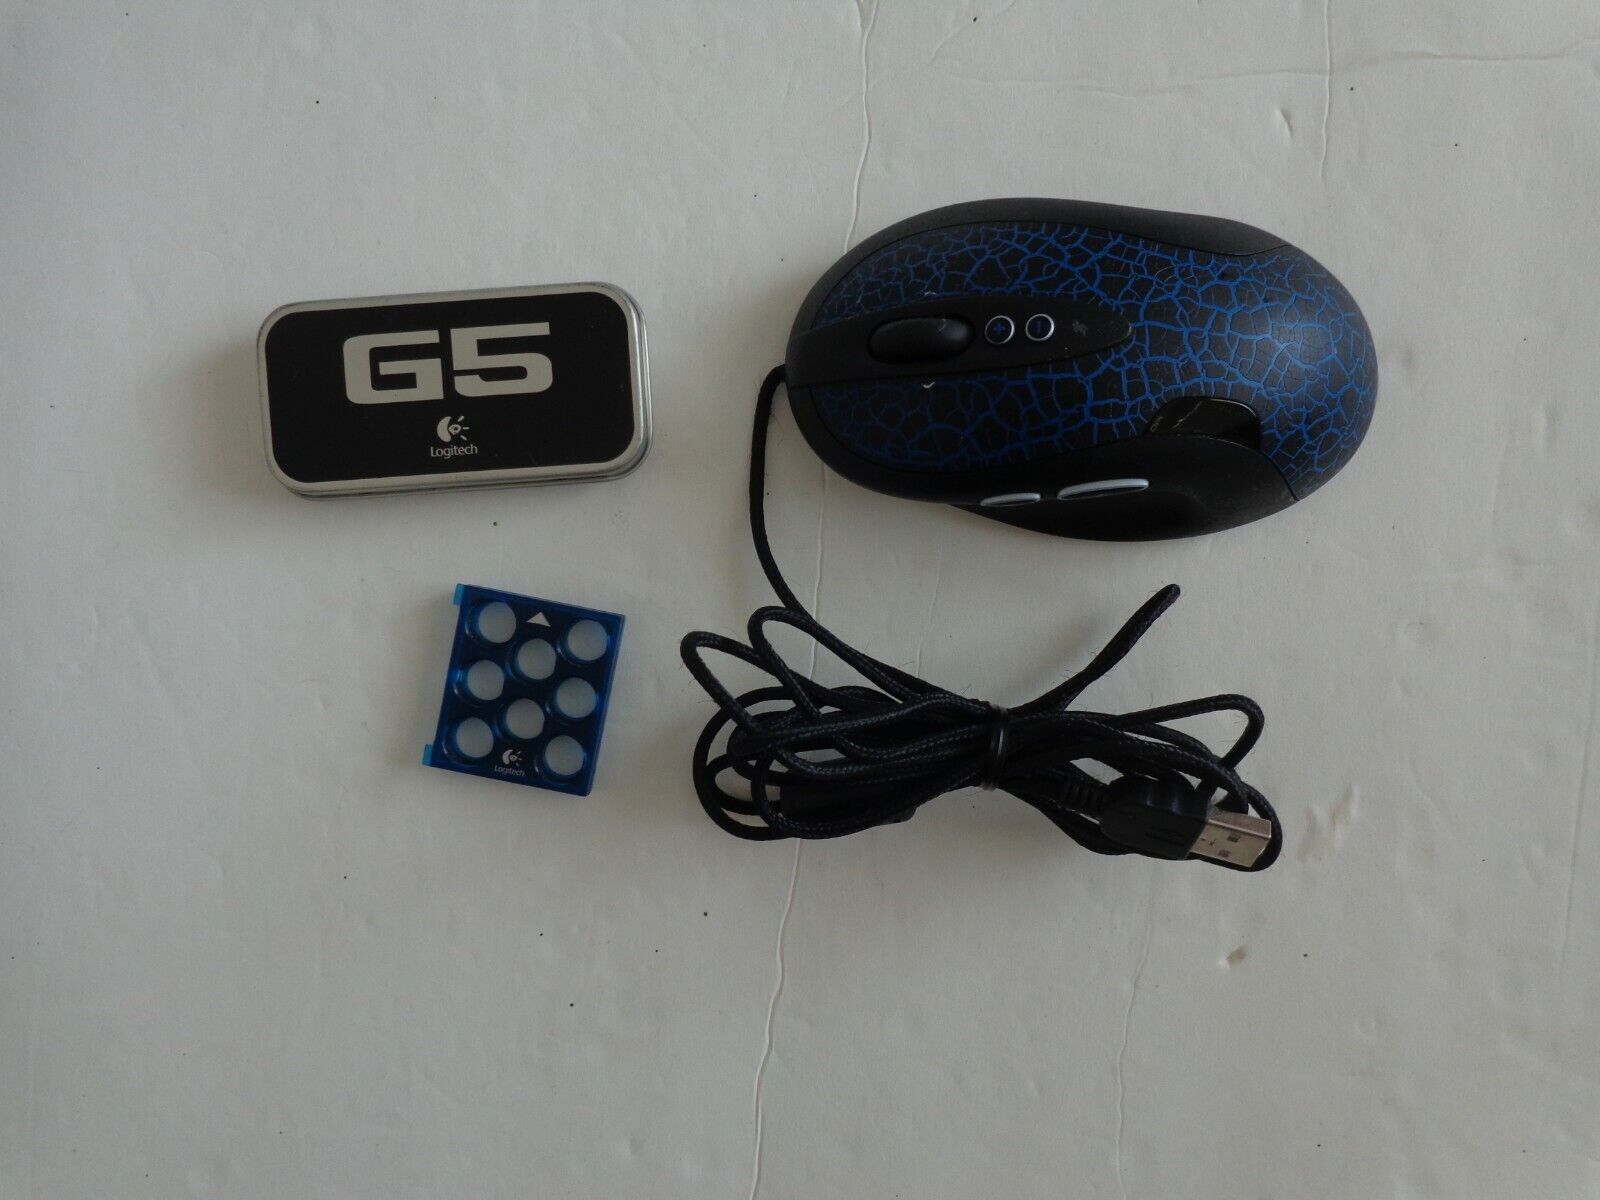 Logitech G5 USB Laser Gaming Mouse w/Adjustable Weight Cartridge